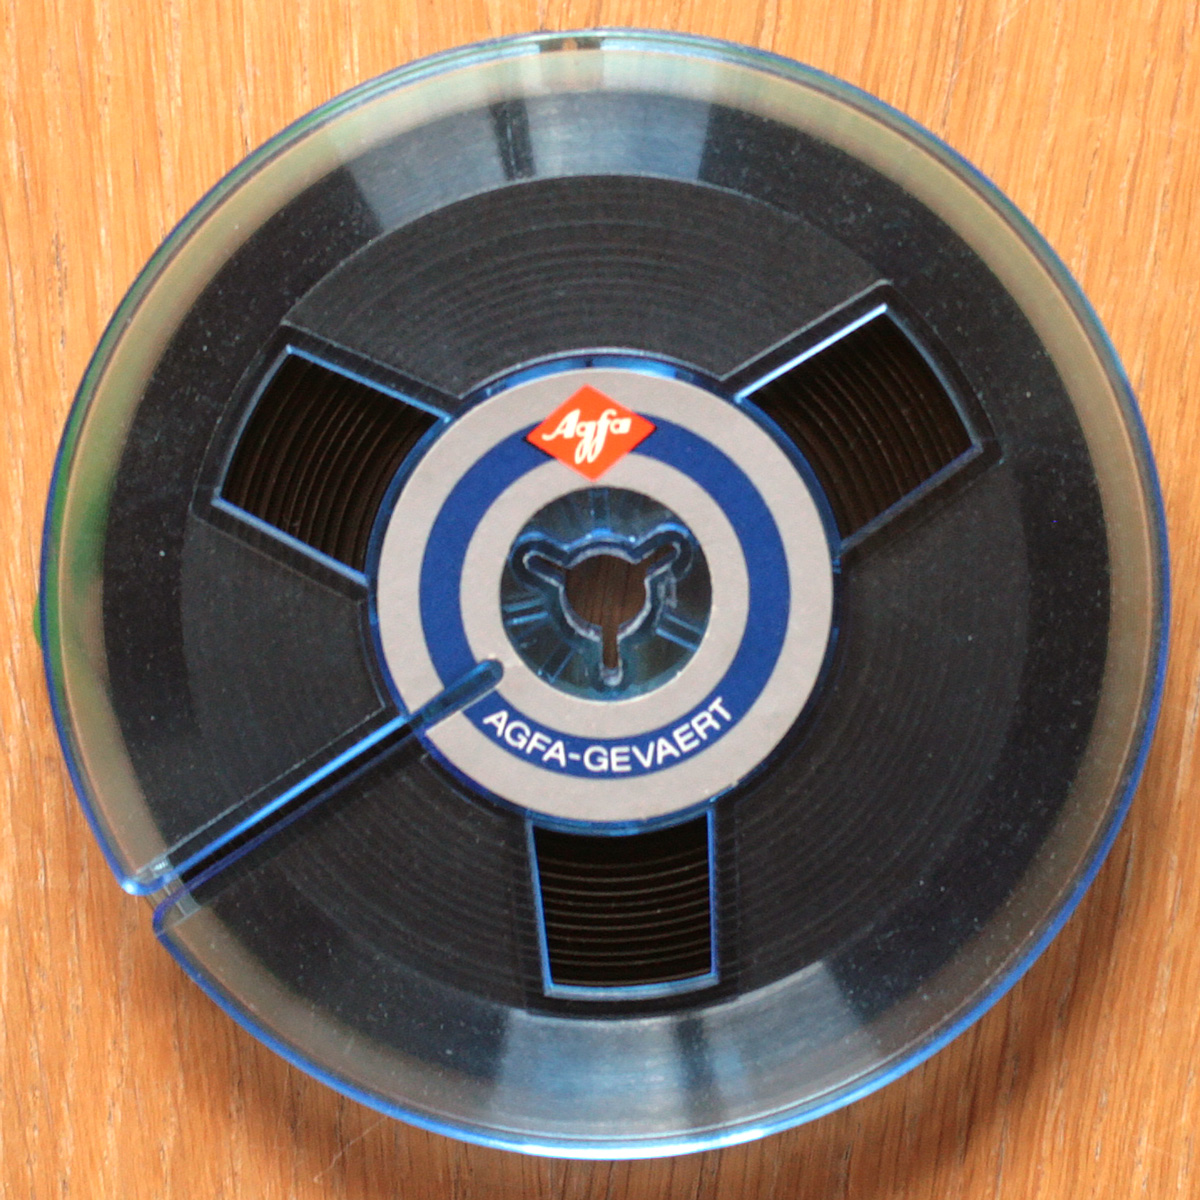 Agfa-Gevaert • Bande magnétique Sans boîtier • Magnetic tape without box • Ø 10.5 cm • Occasion • Used